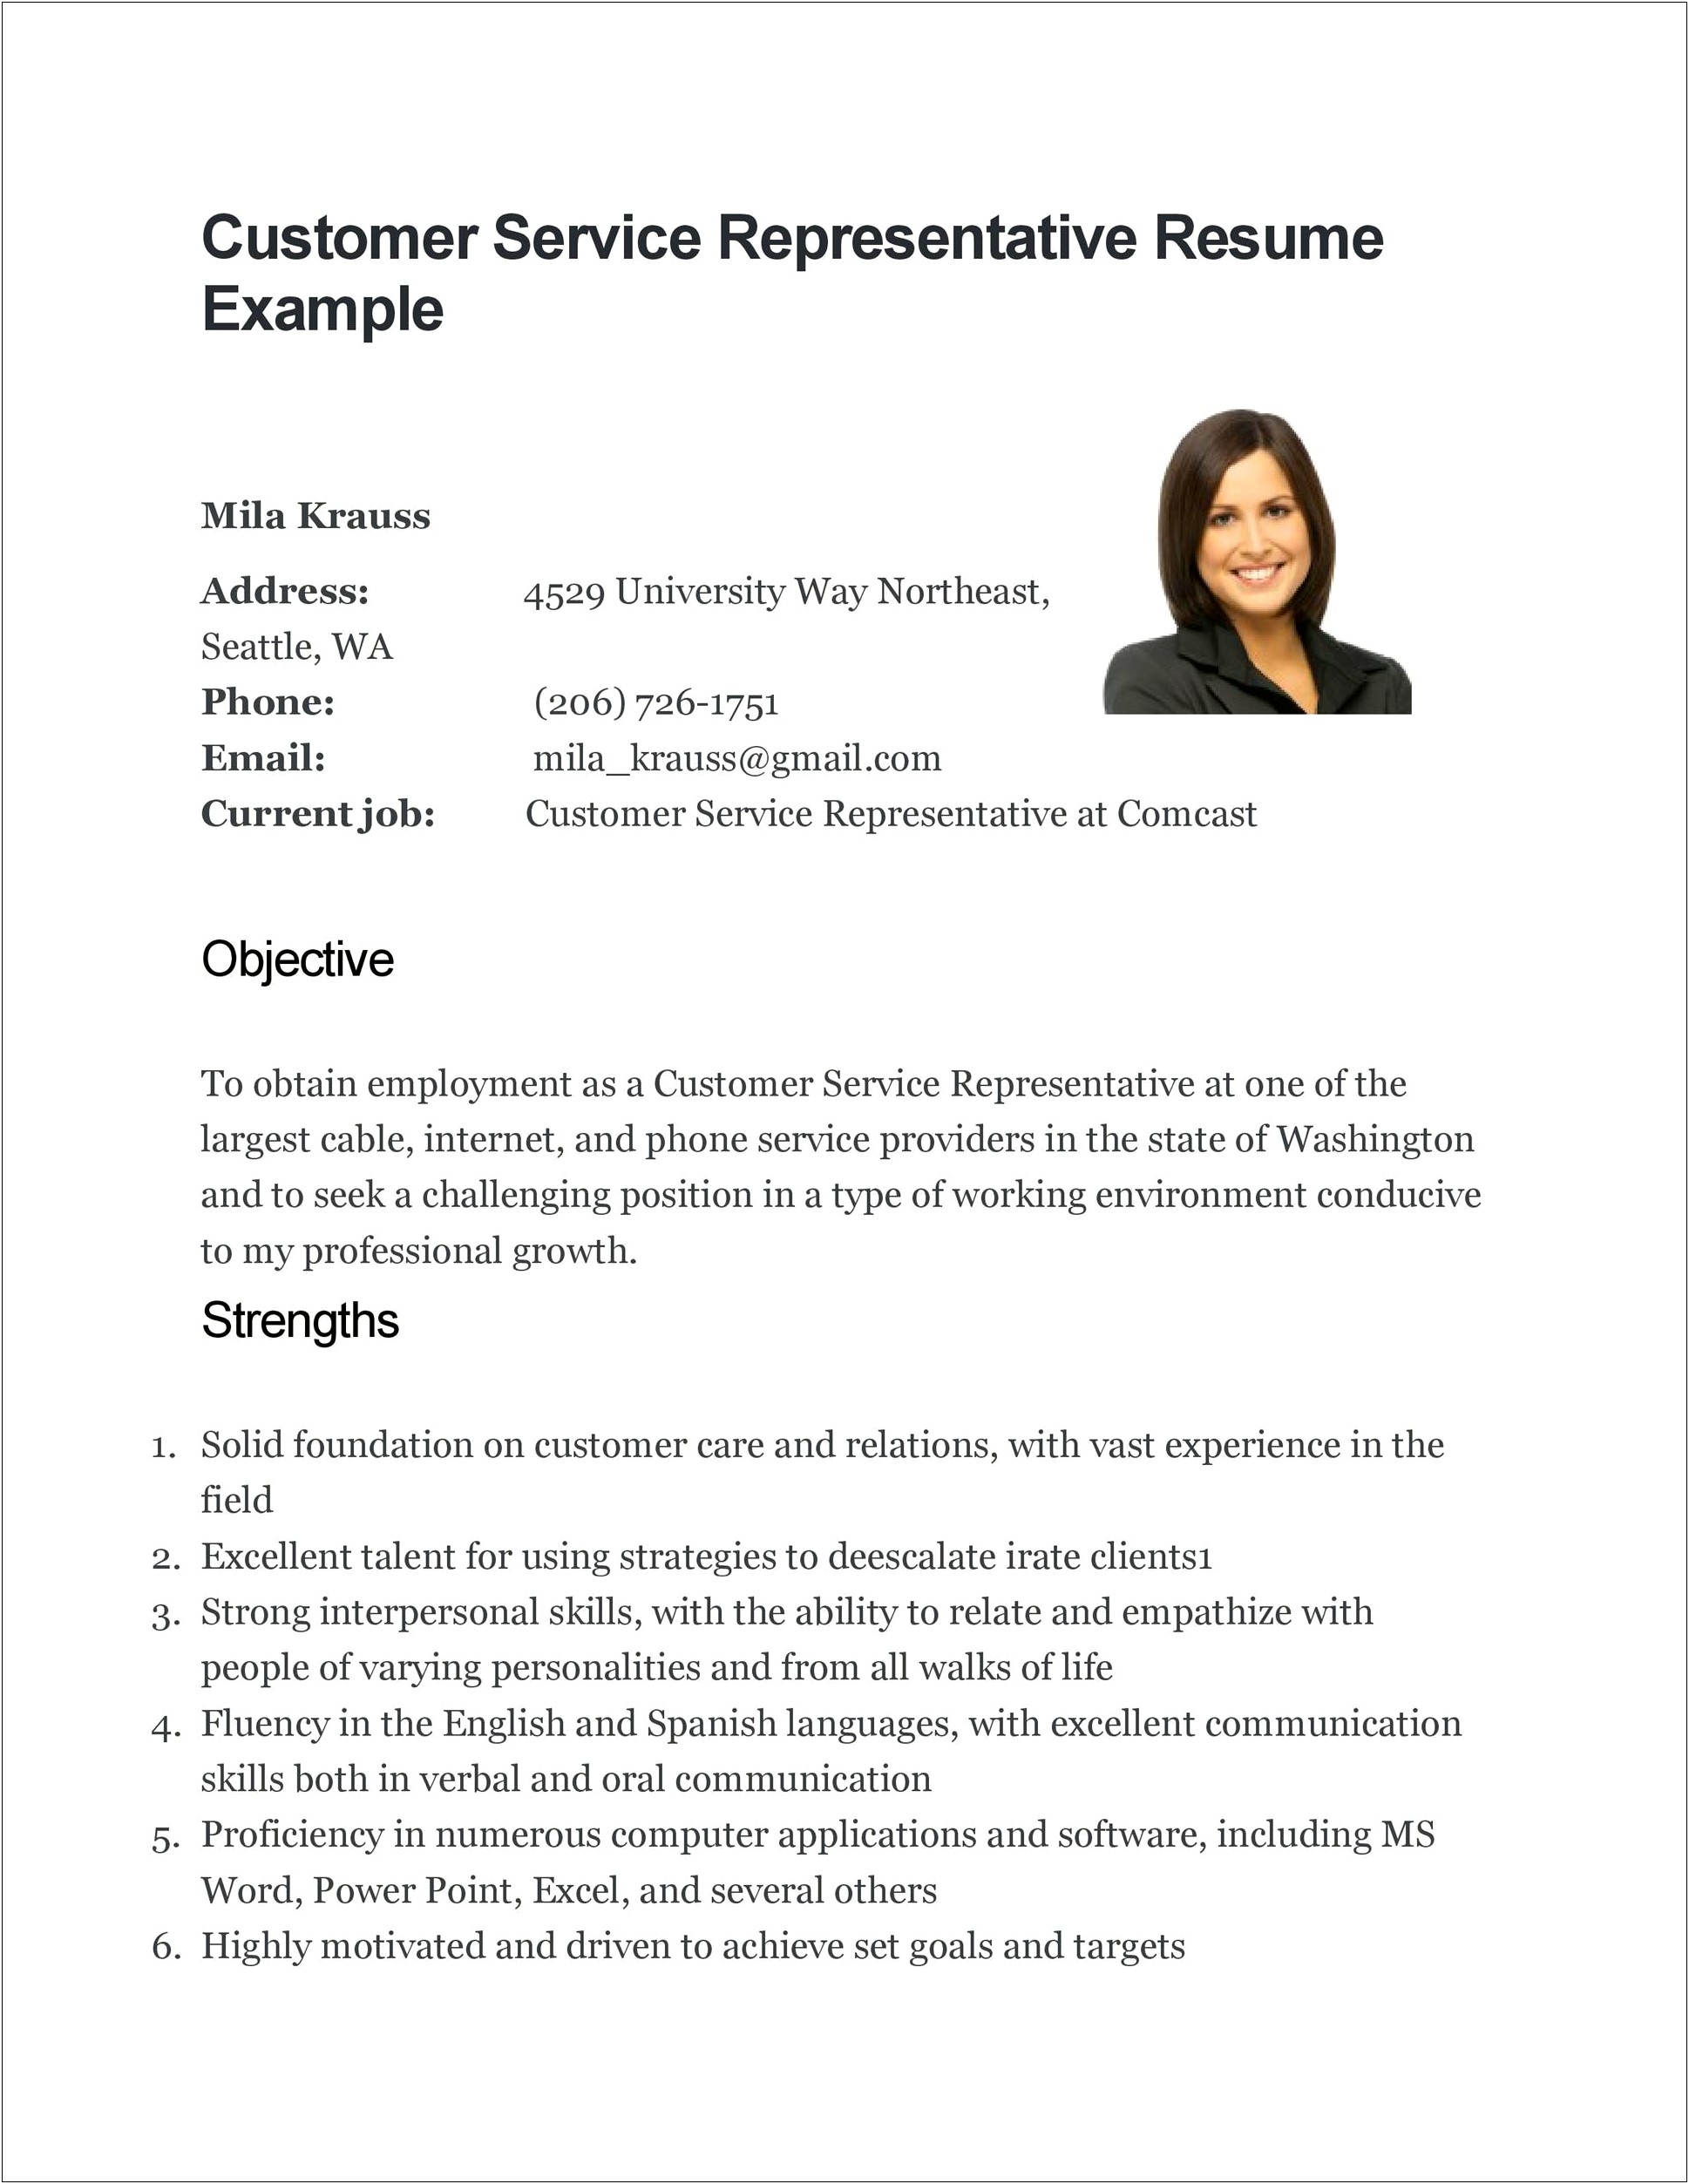 Patient Service Representative Resume Example